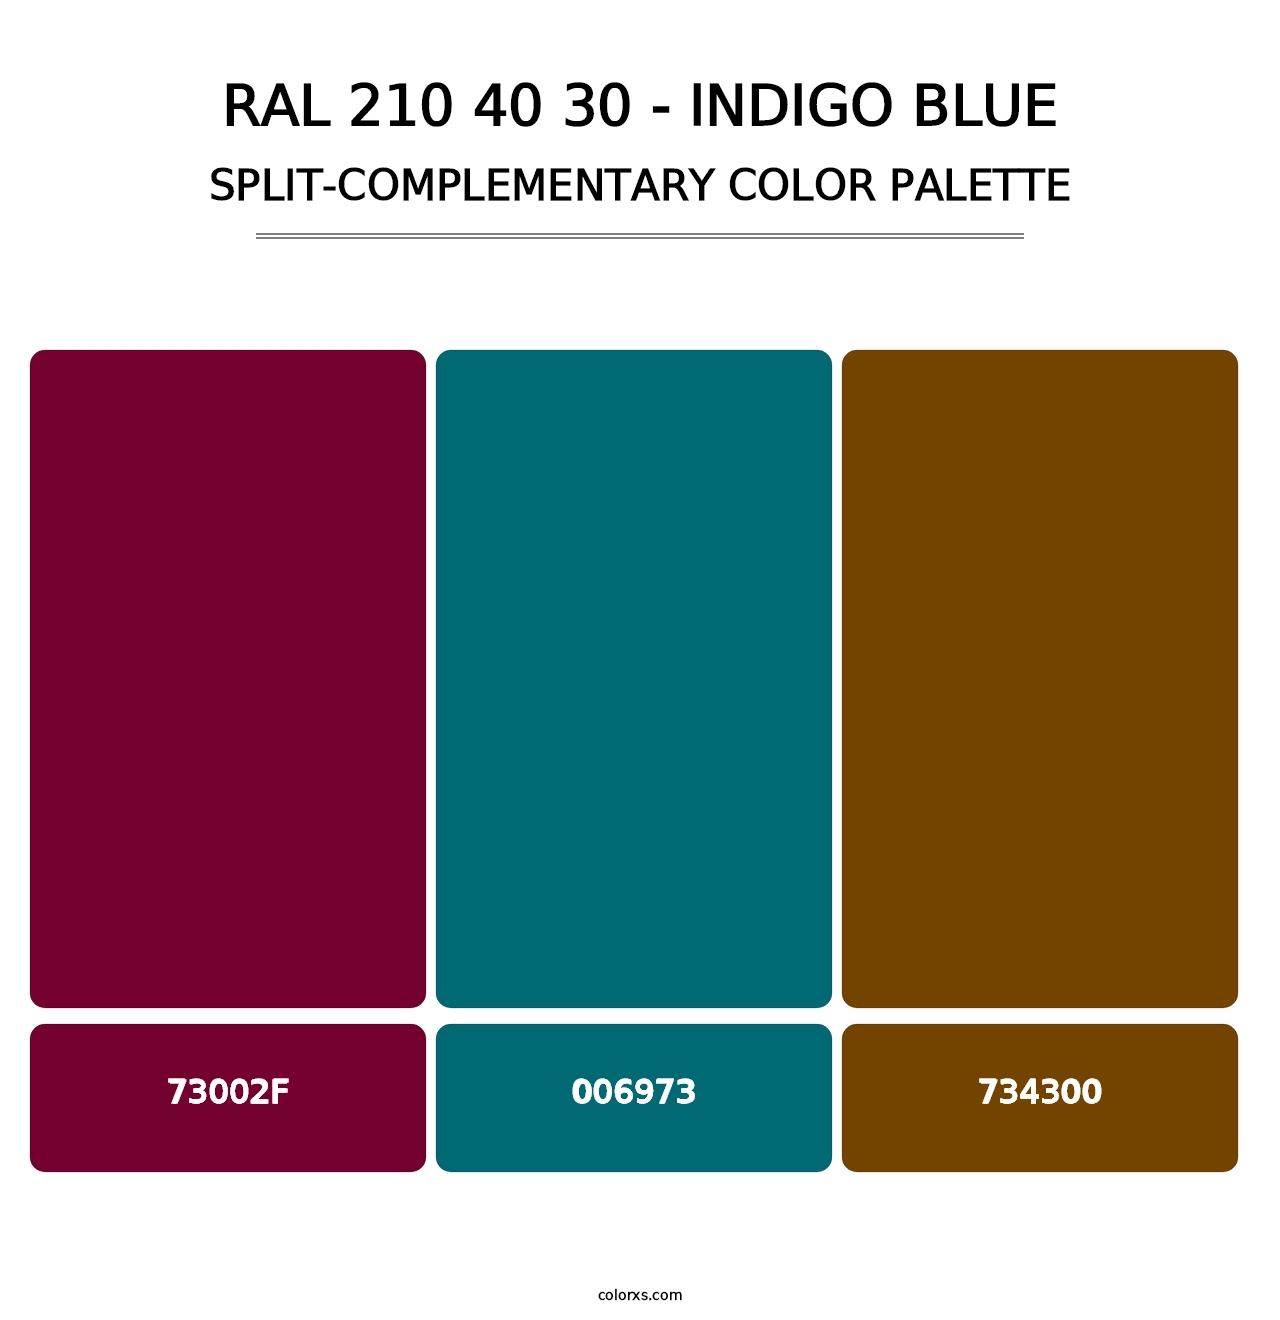 RAL 210 40 30 - Indigo Blue - Split-Complementary Color Palette